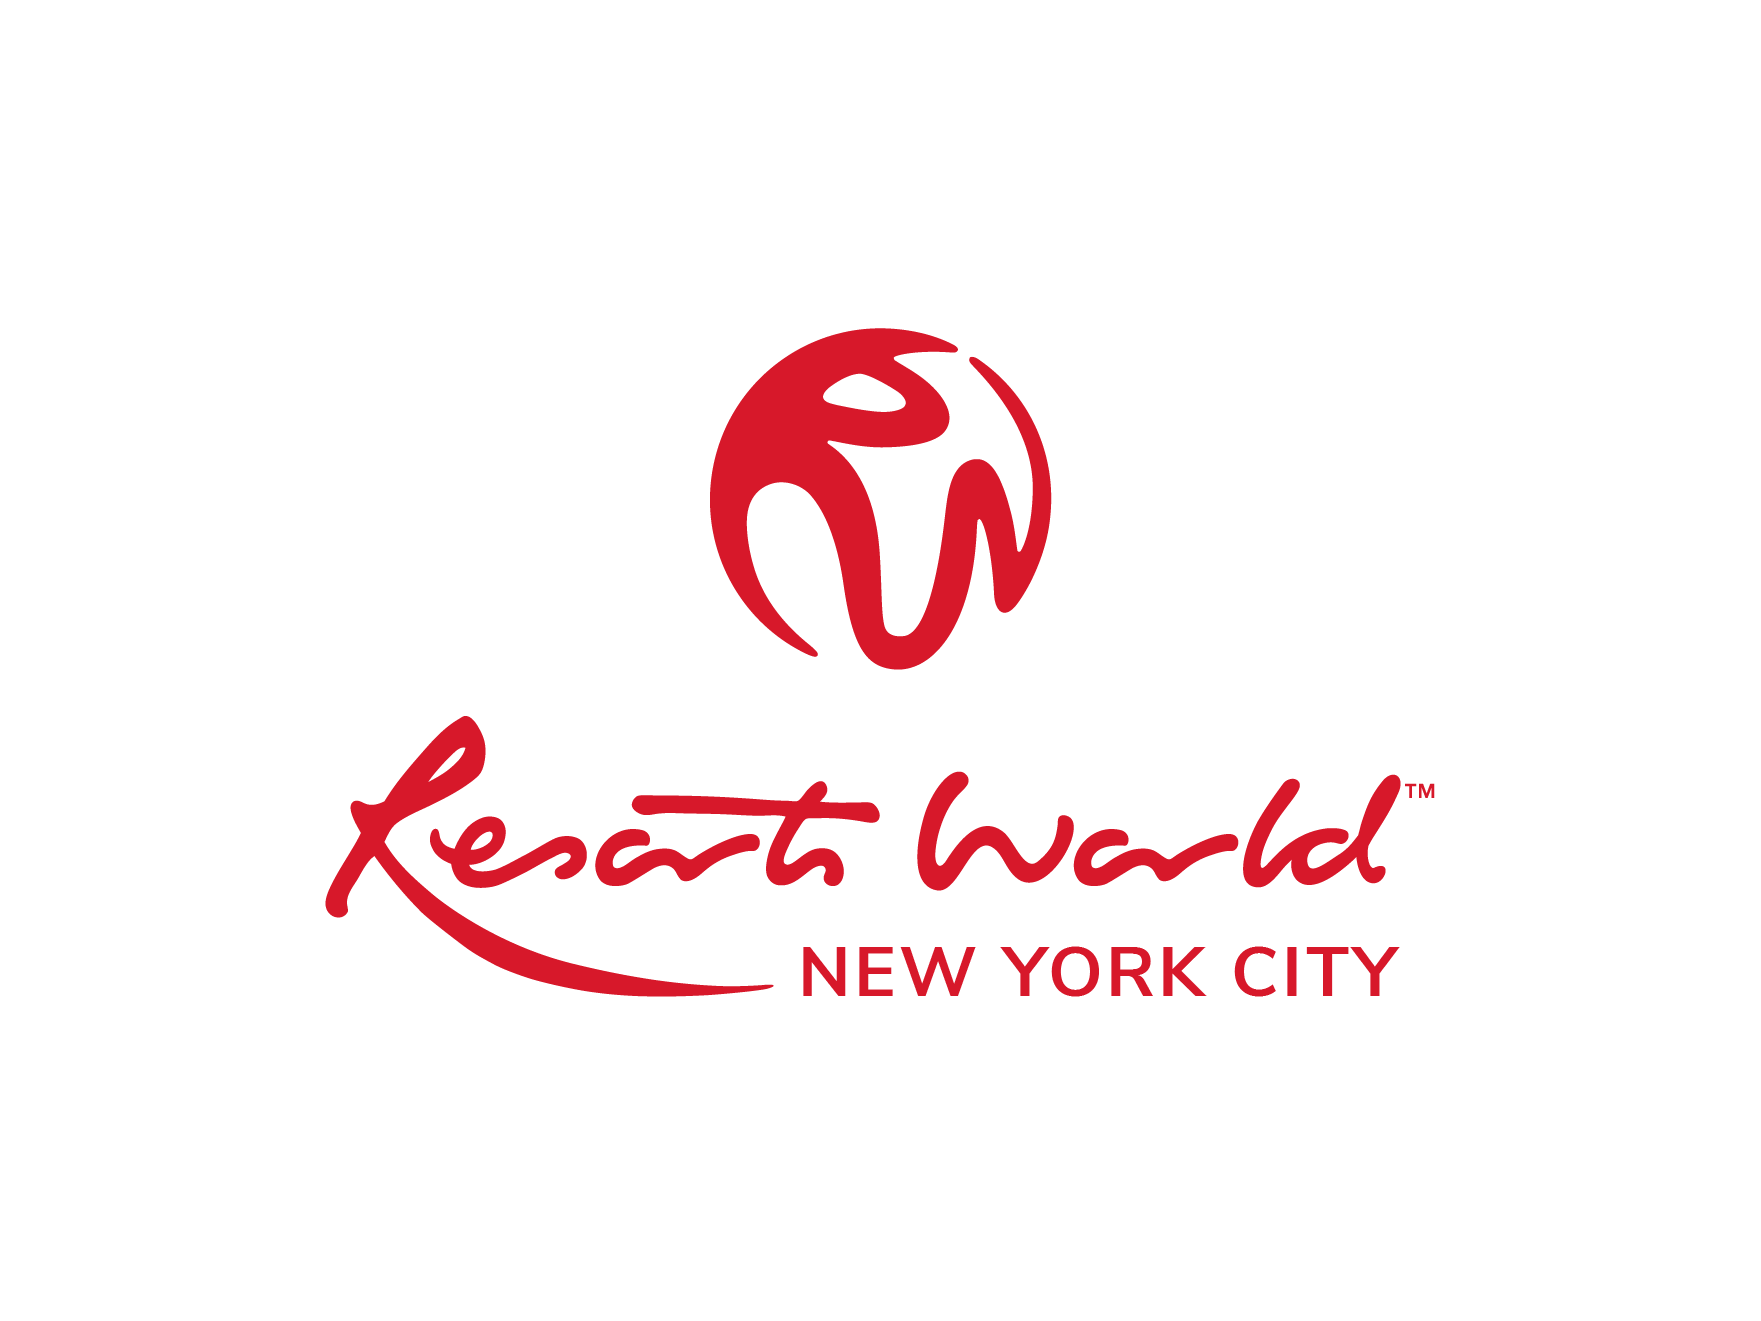 2 Resorts World New York